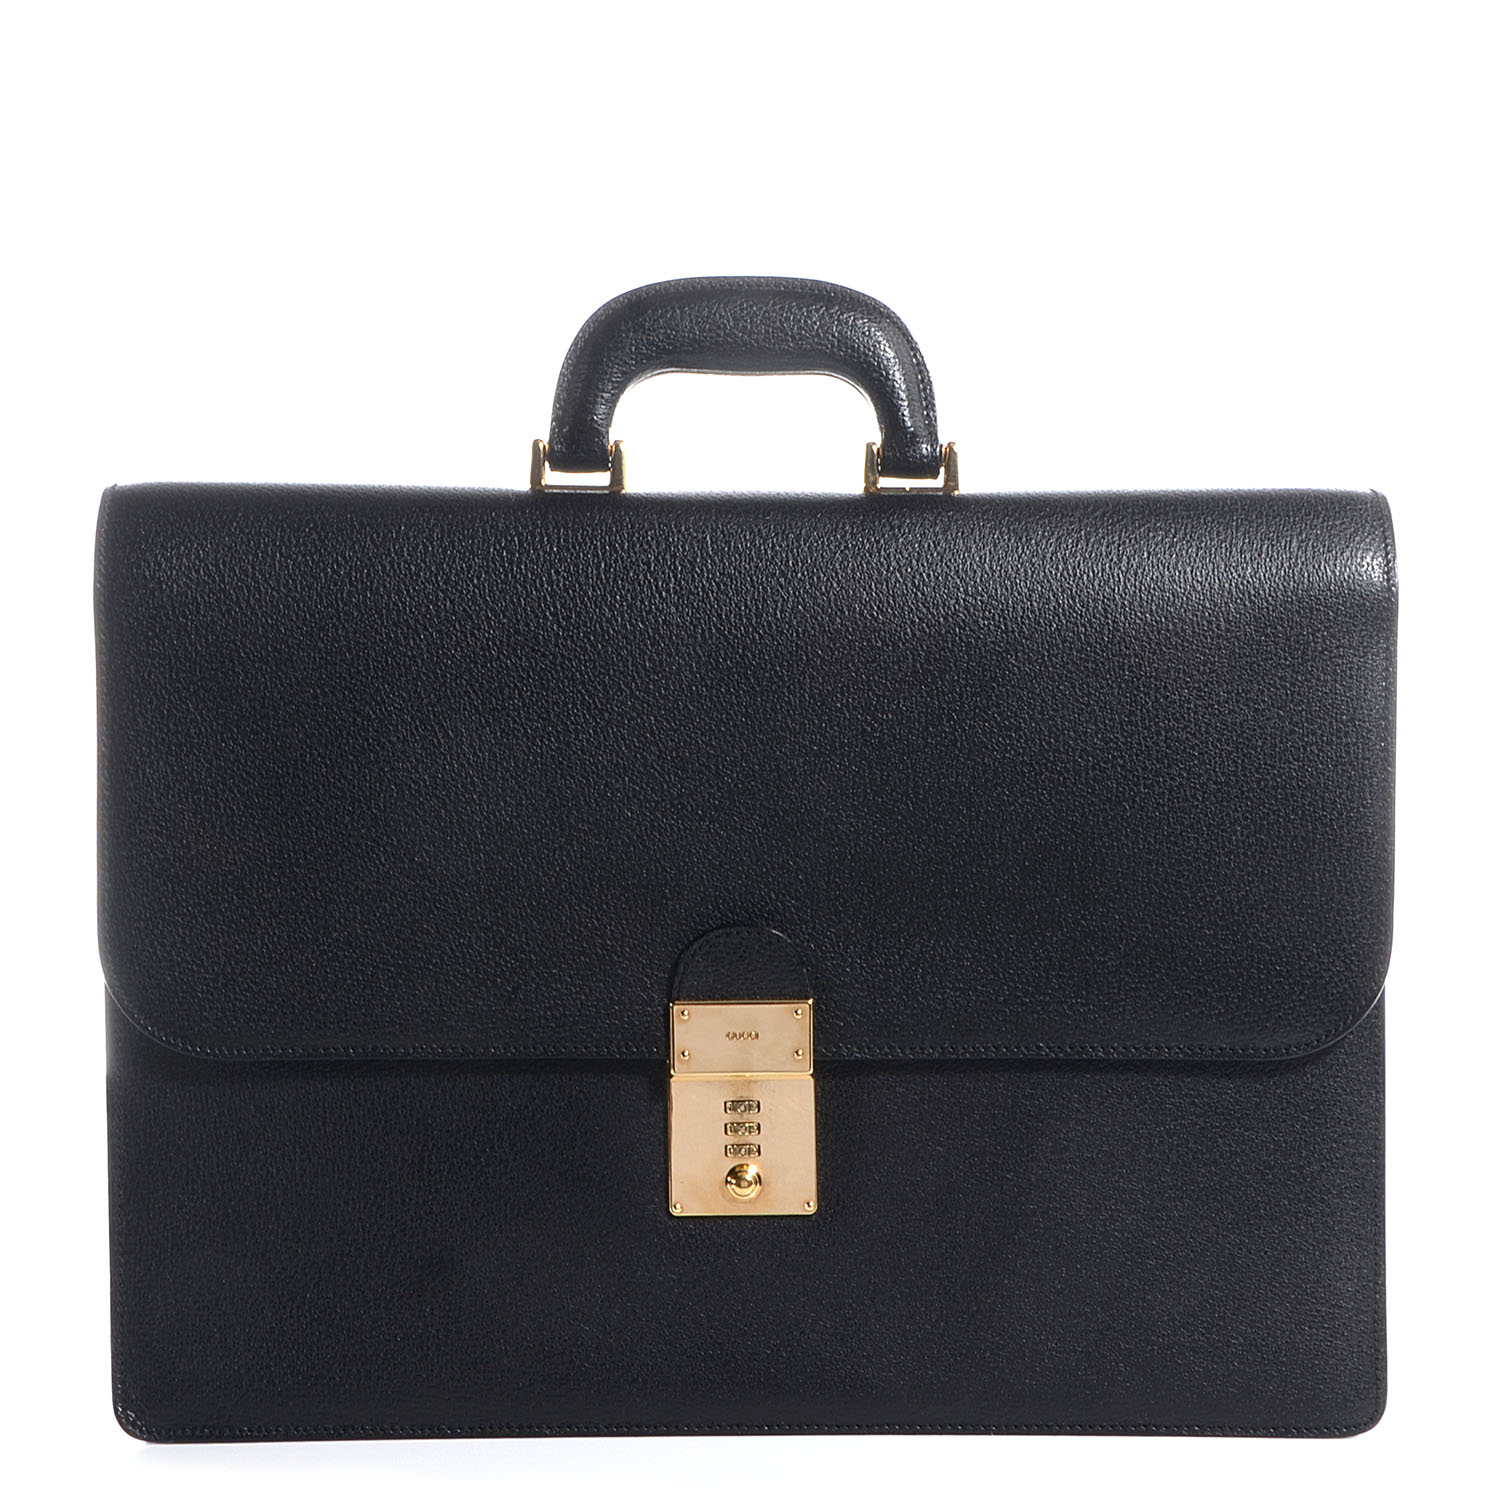 GUCCI Leather Briefcase Black 77970